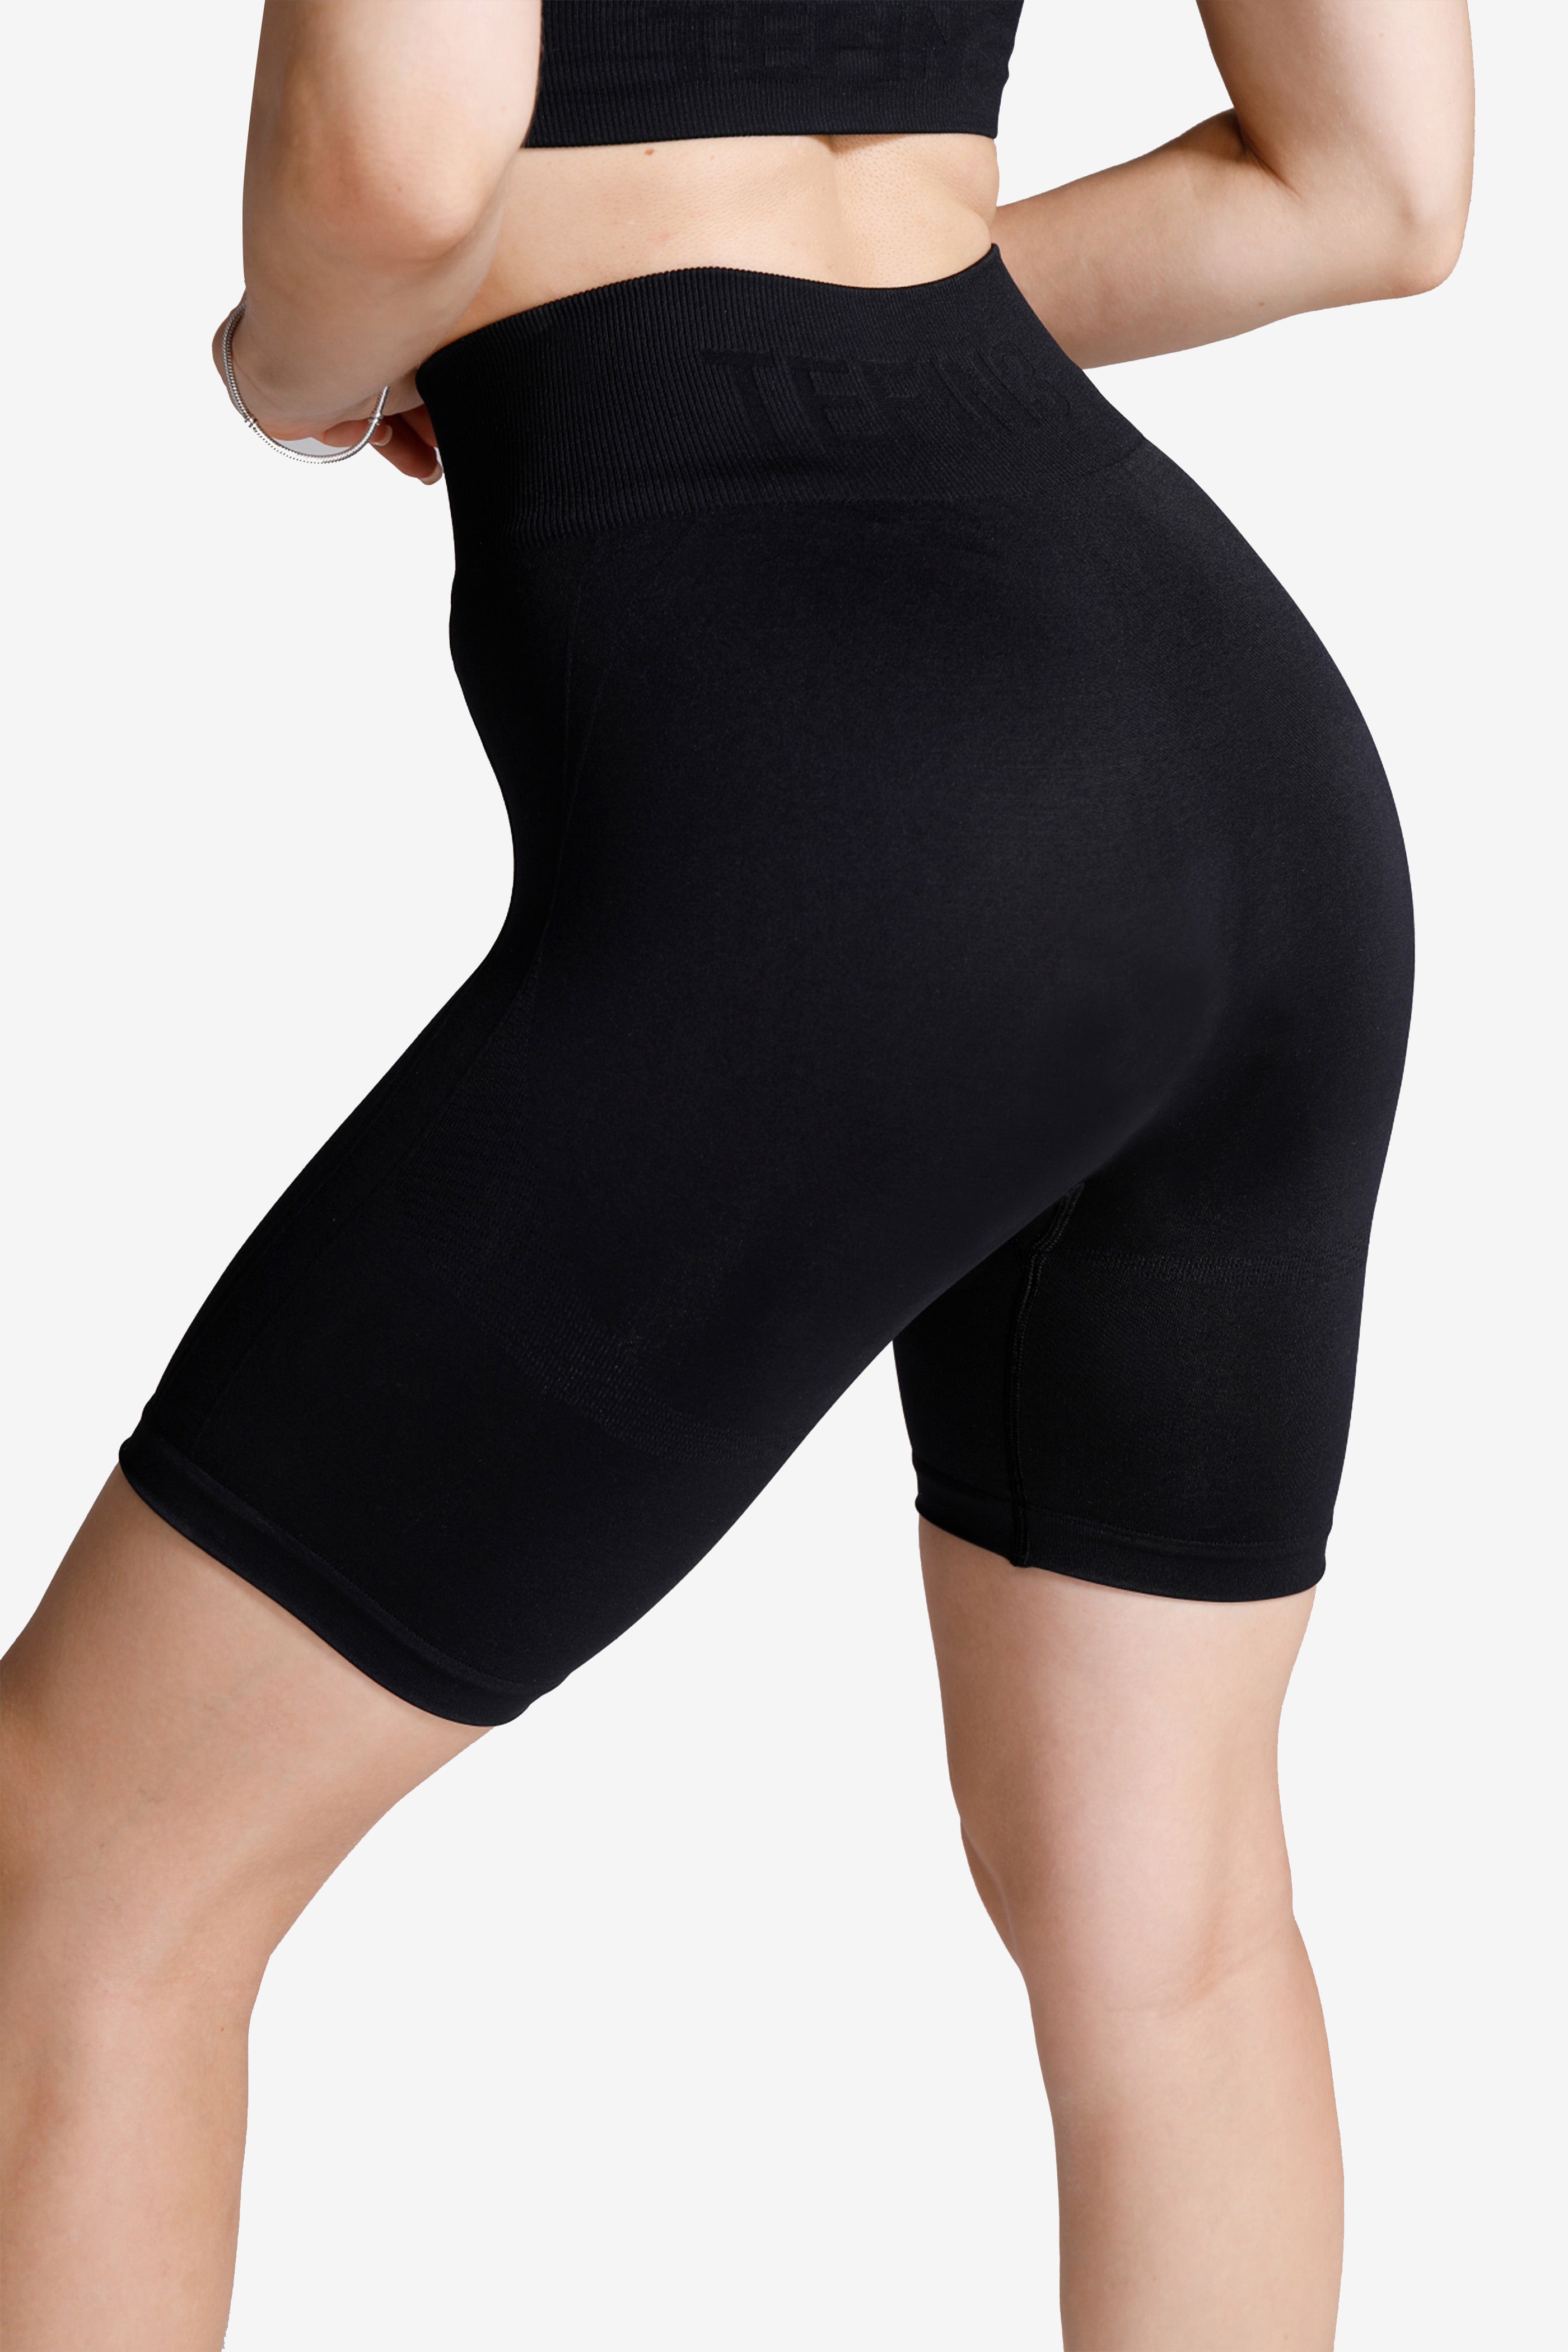 Seamless Shorts Workout TEFIN3 Women Comfy Black